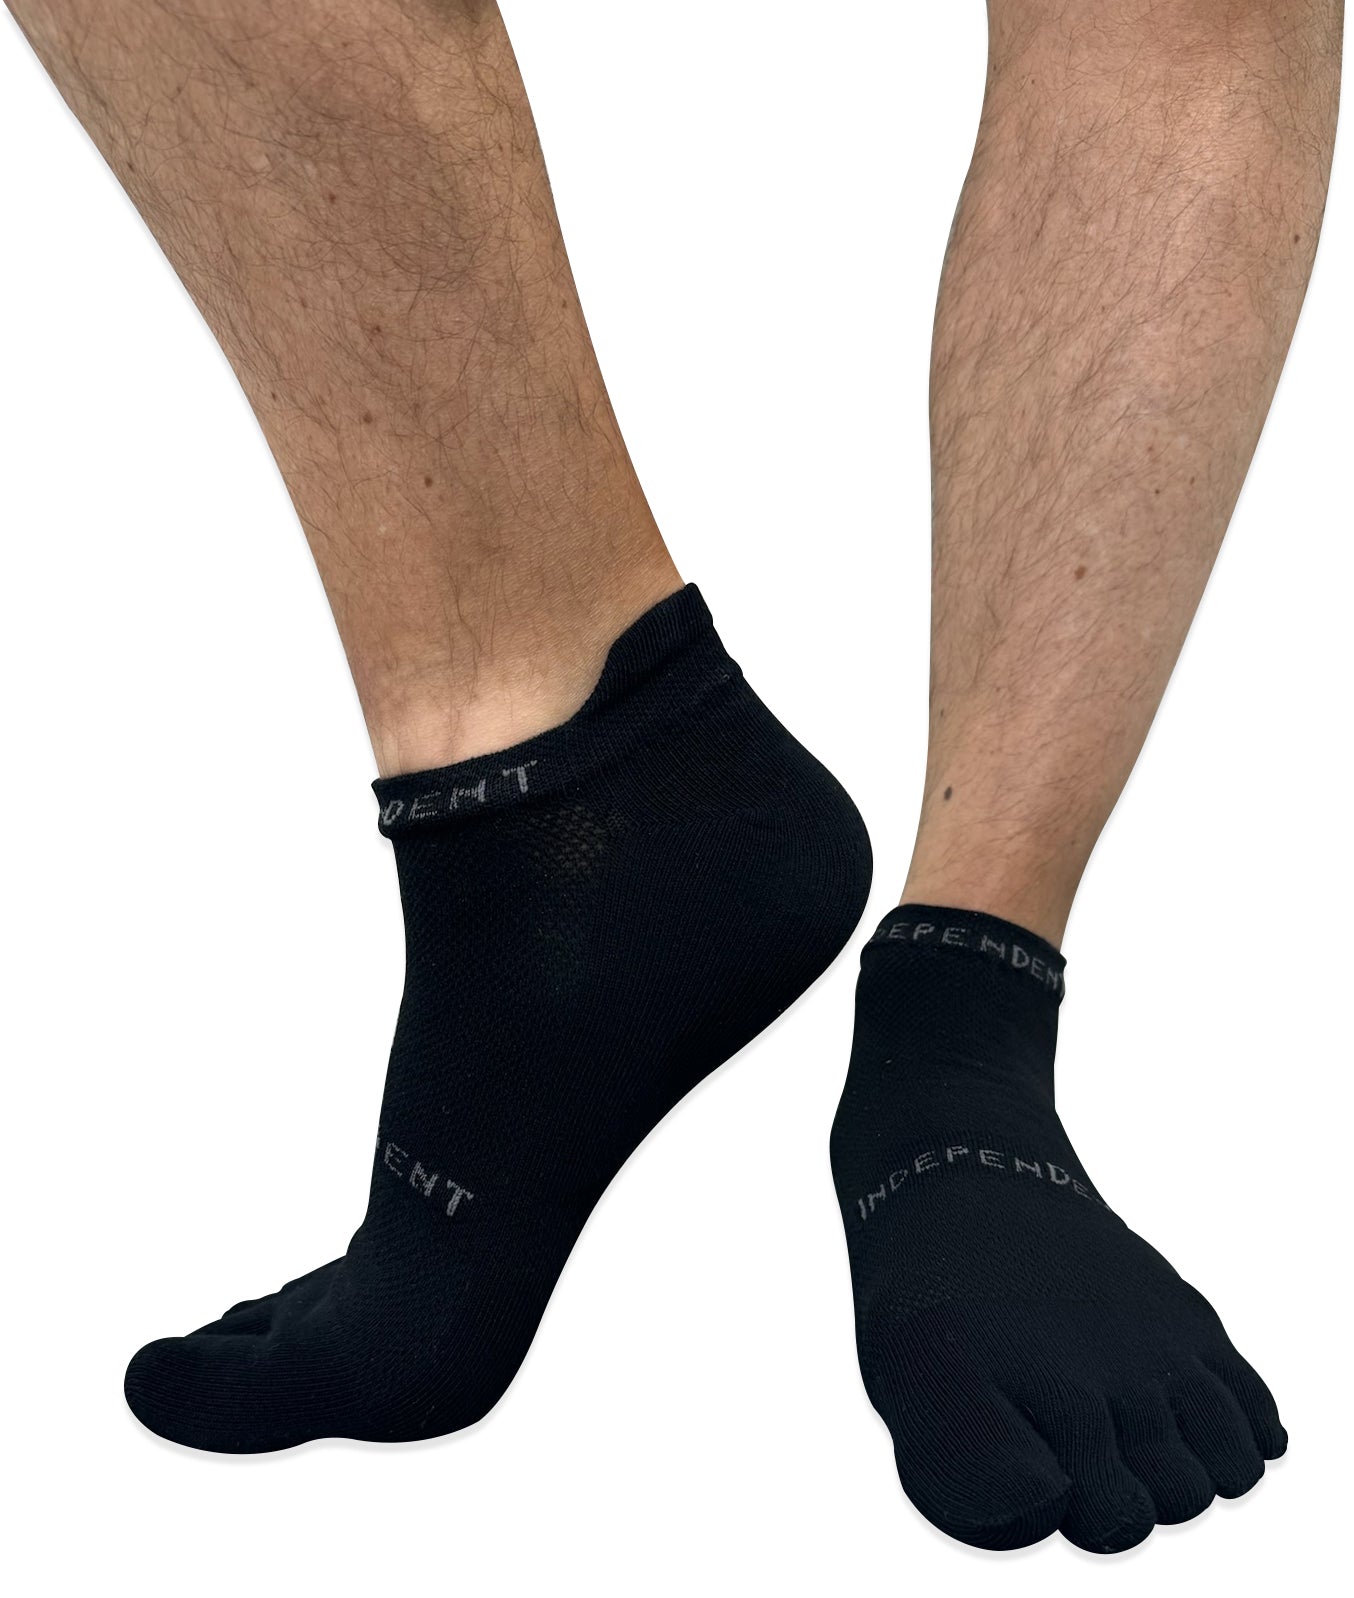 Independent Toe Socks (Black and White) for Men